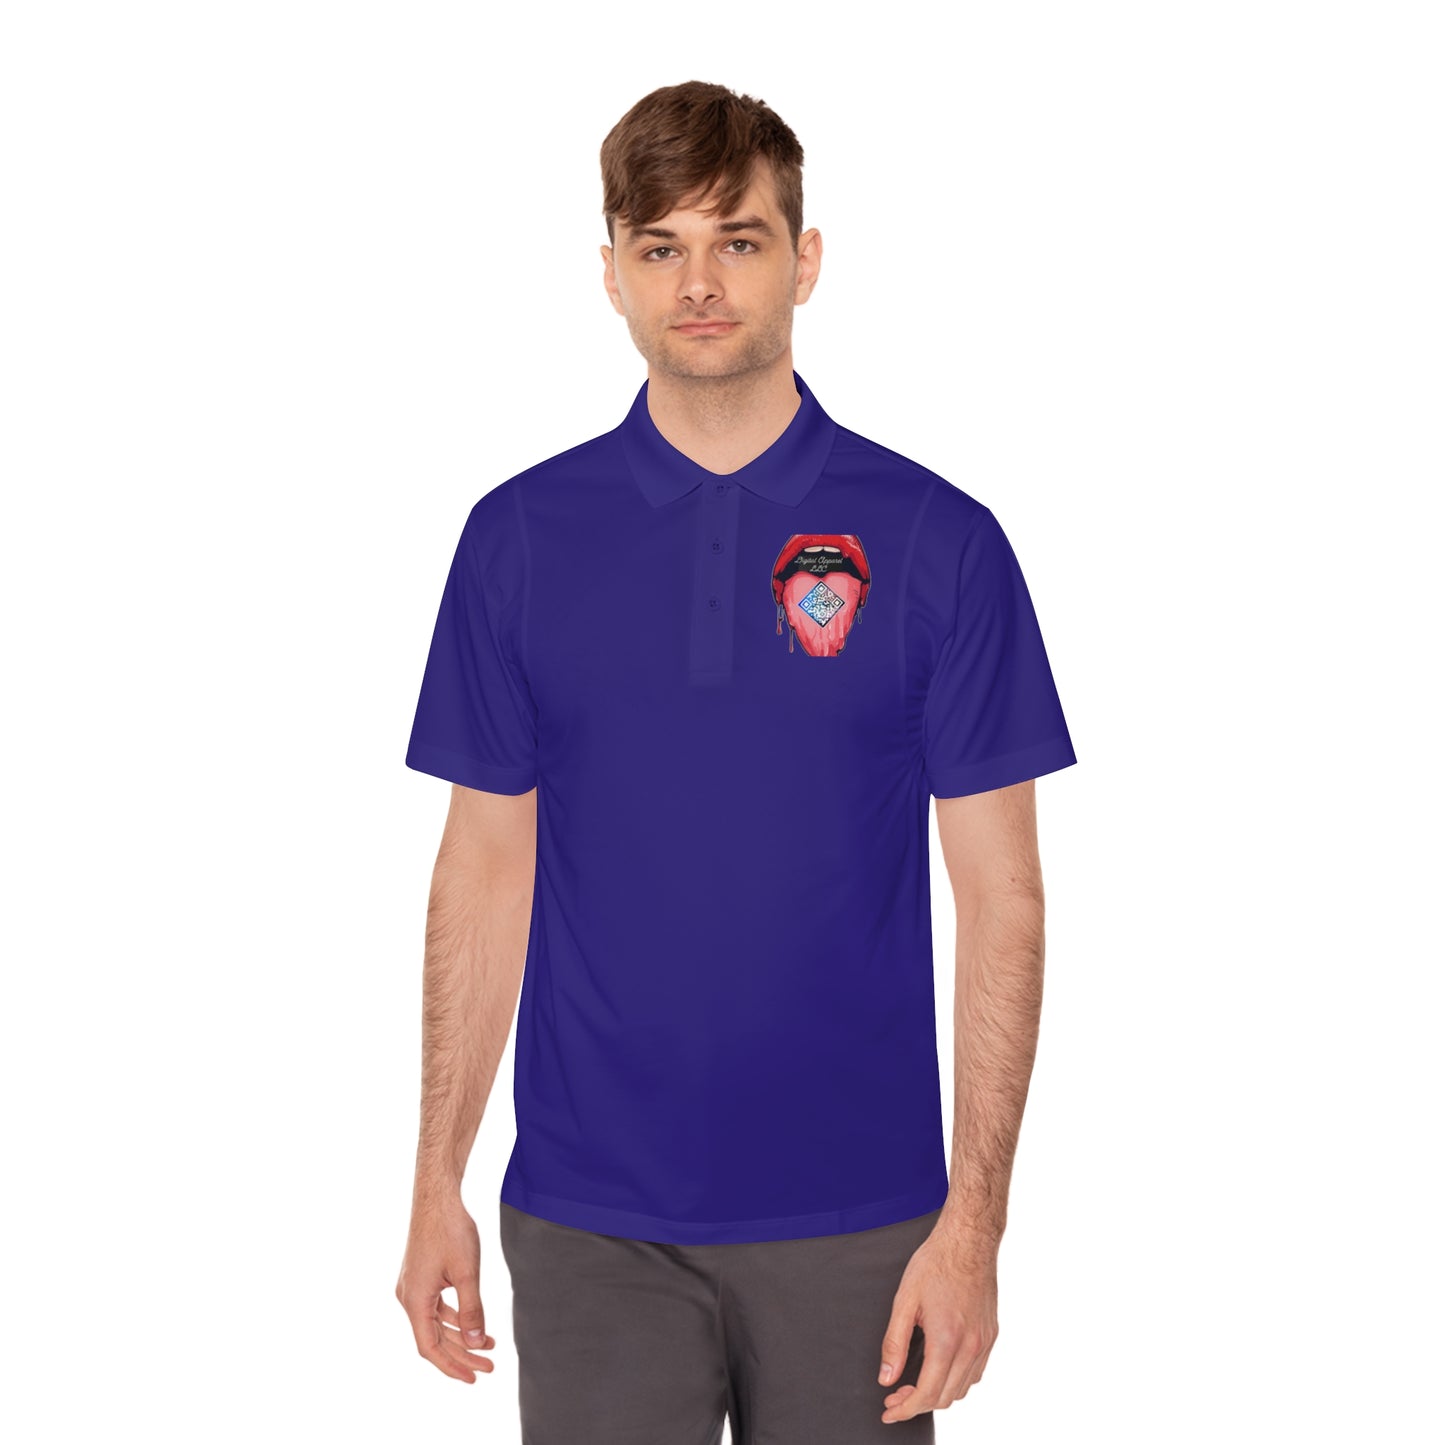 Men's Digital Sport Polo Shirt